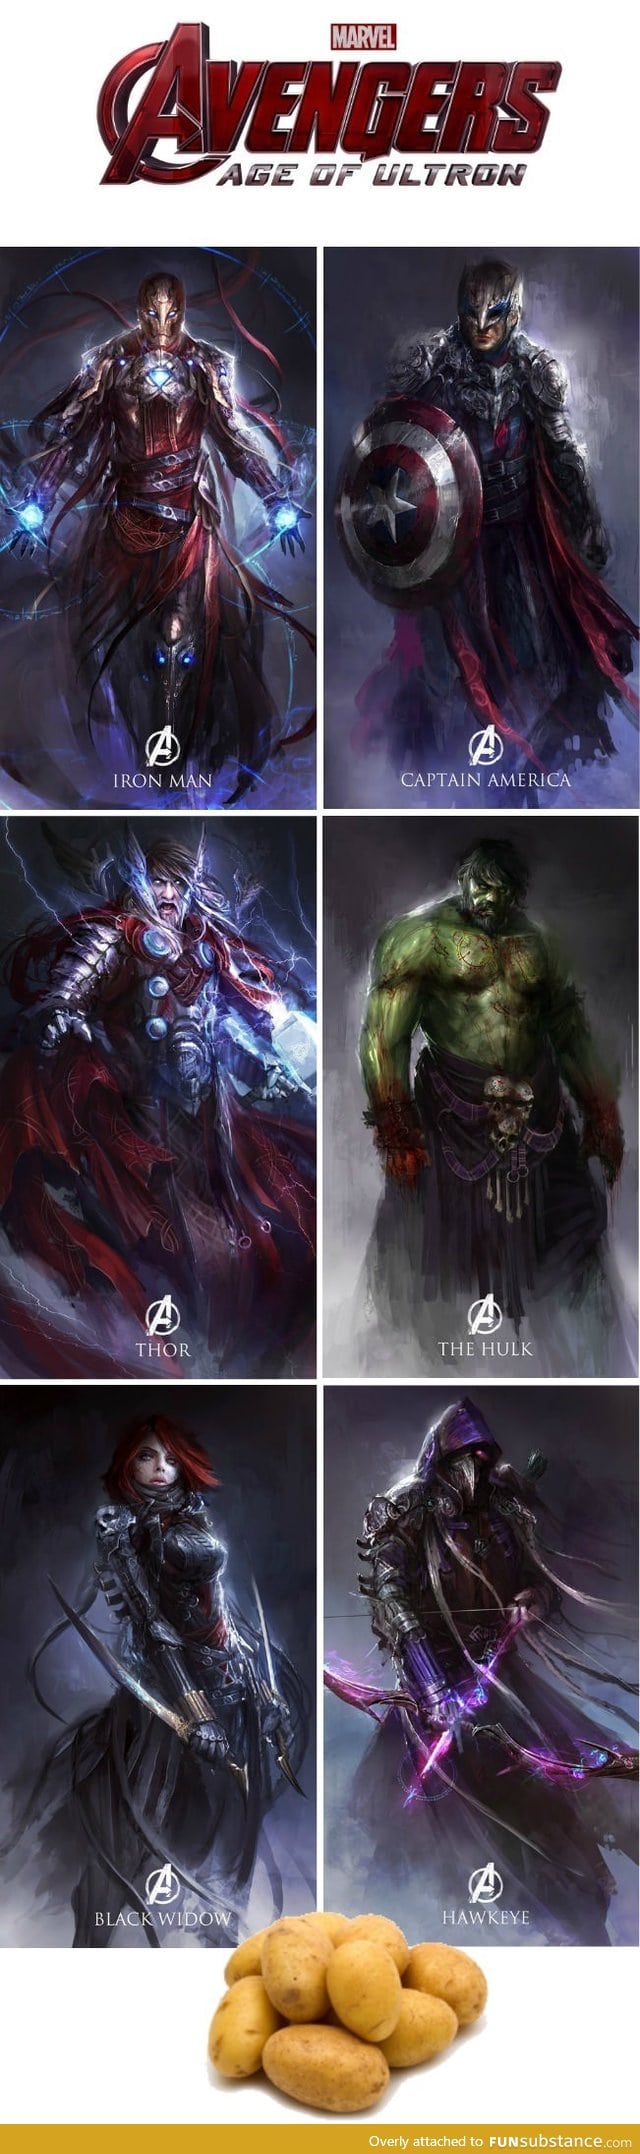 Marvel's Avengers Re-Imagined as Fantasy Heroes